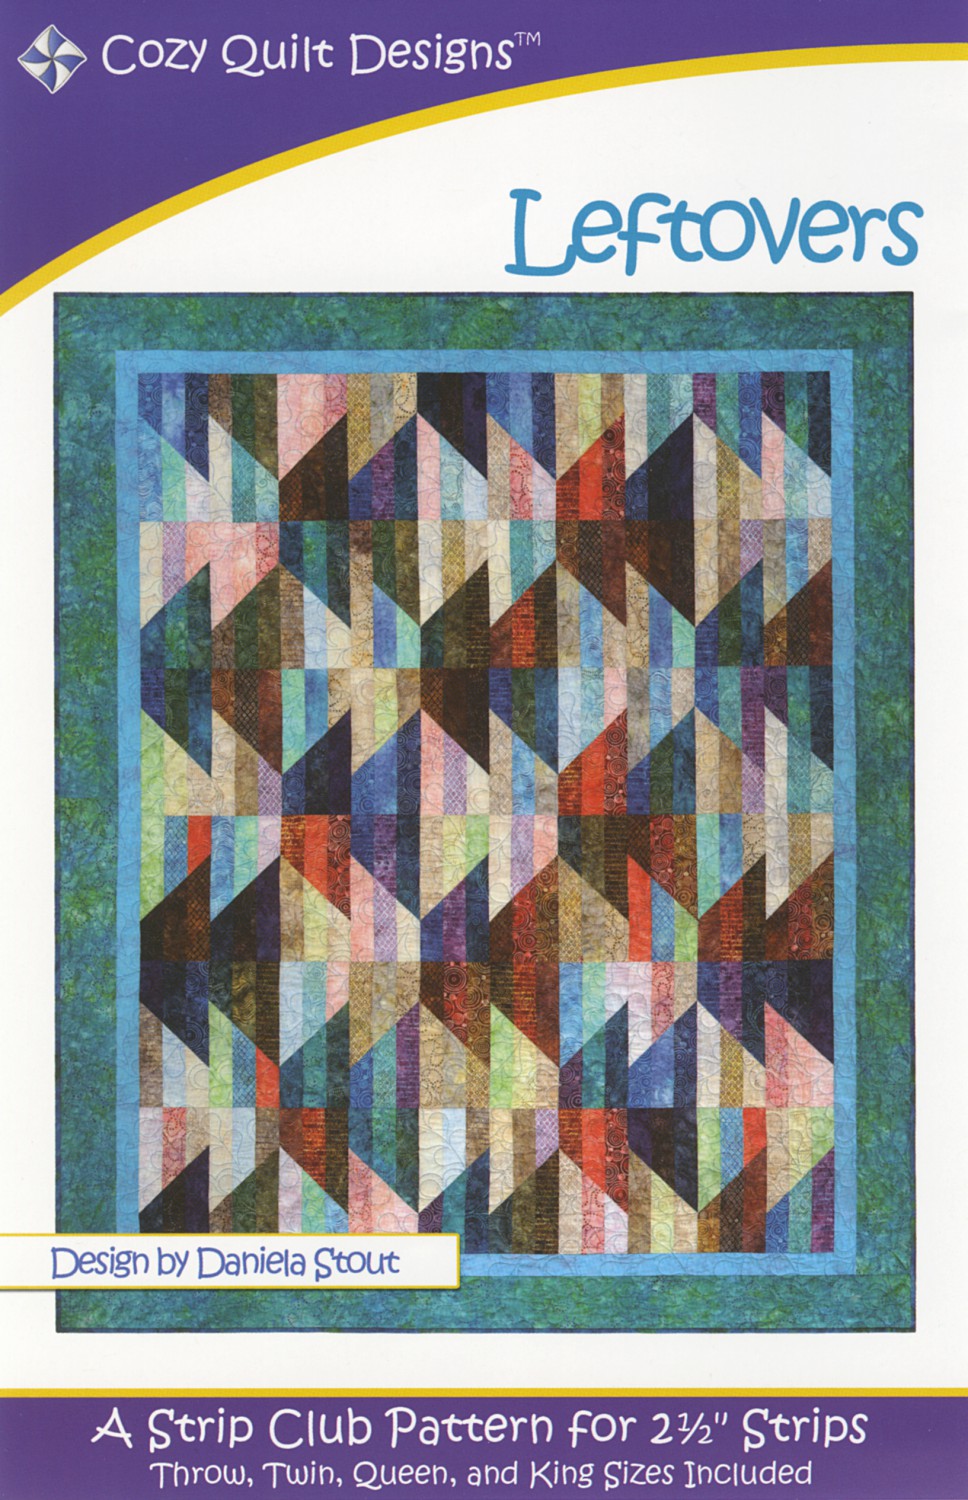 Cozy Quilt Designs Left Overs Quilt Pattern